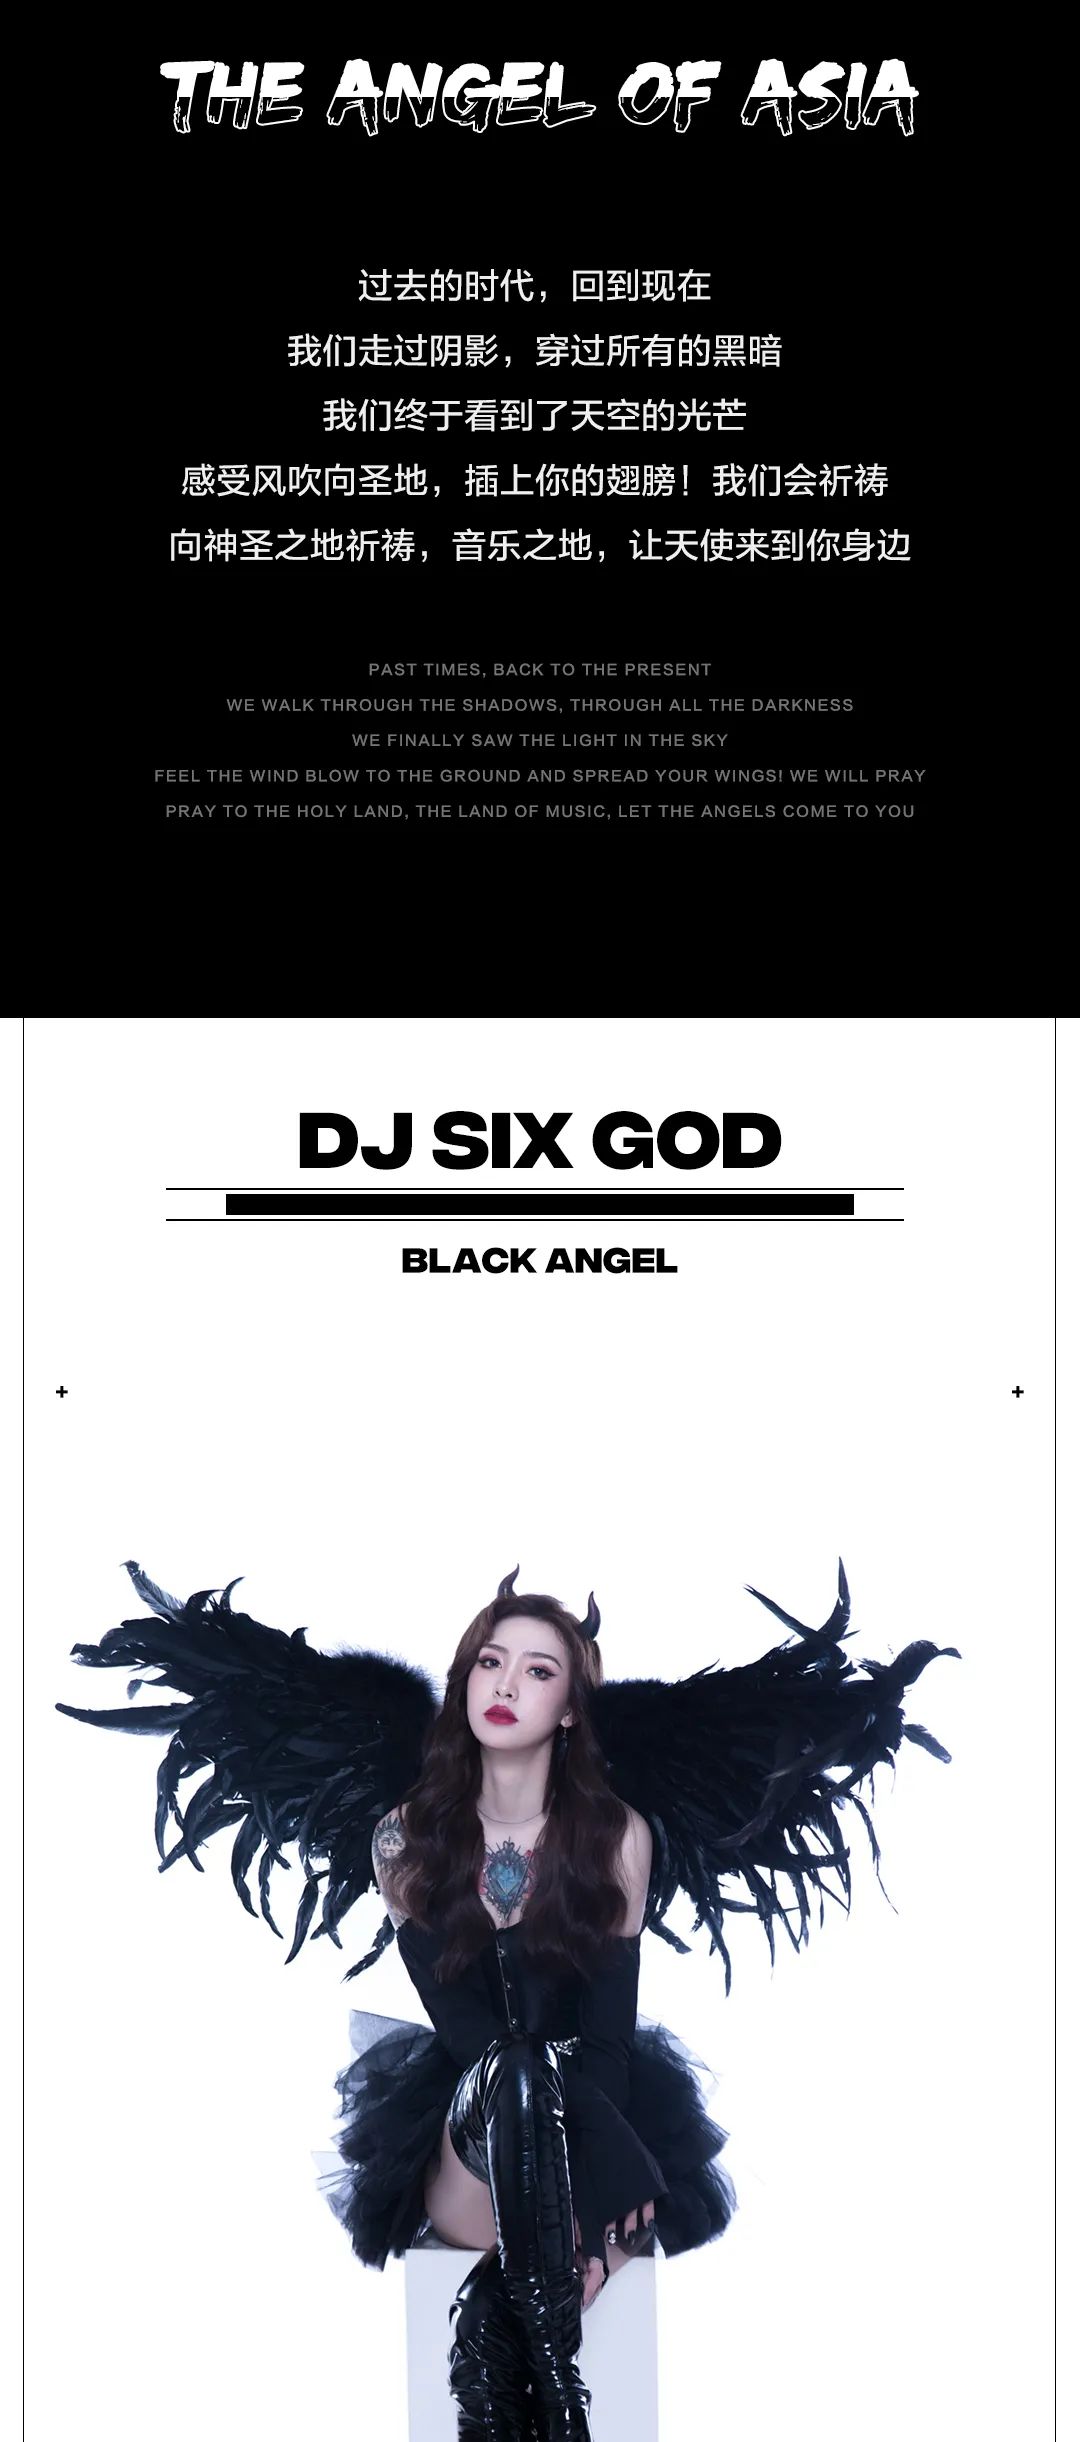 5.22 DJ AOA丨黑与白的天使，是双倍快乐的开始-塘厦音乐公园/MusicPark